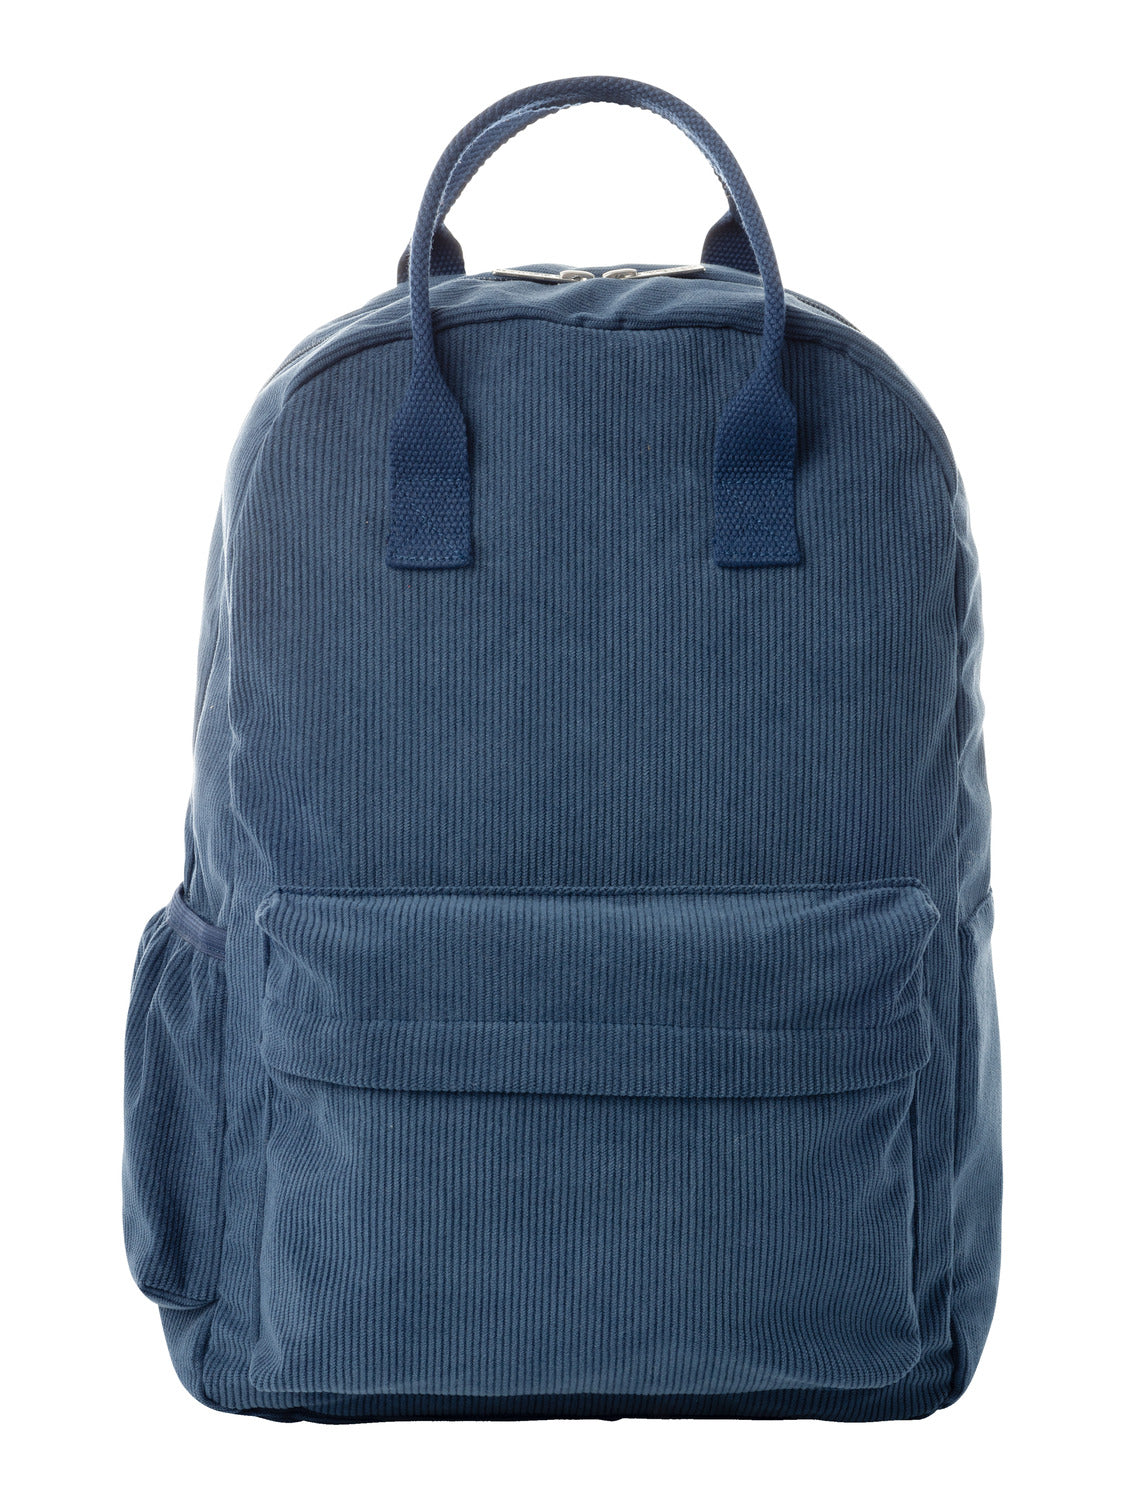 NKMNOLURO Bags - True Blue